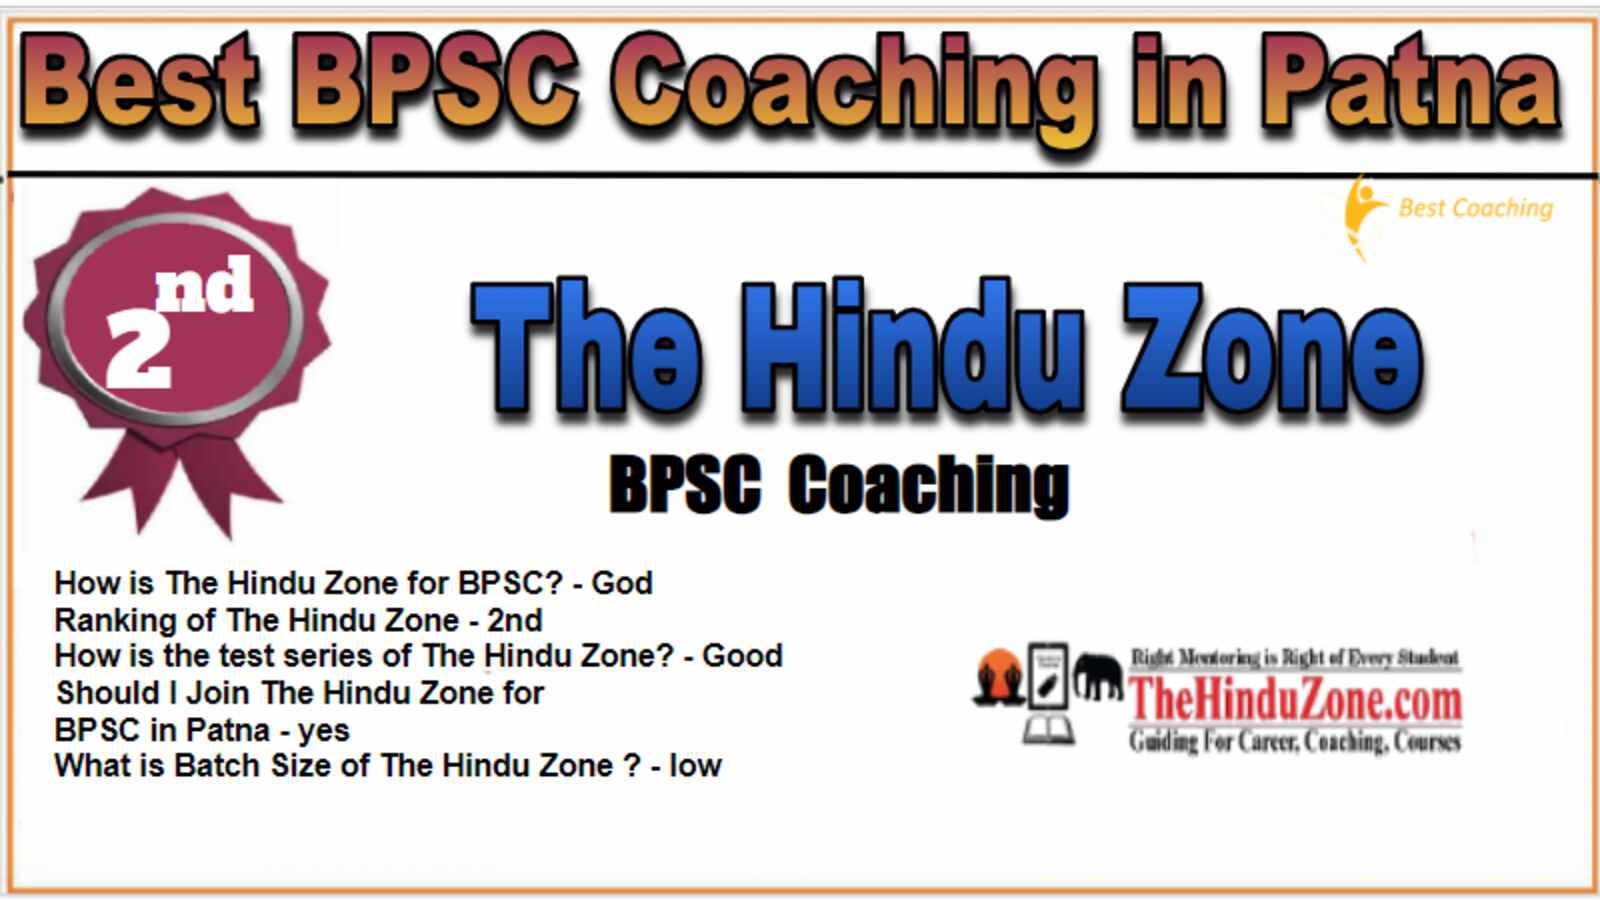 Rank 2 Best BPSC Coaching in Patna